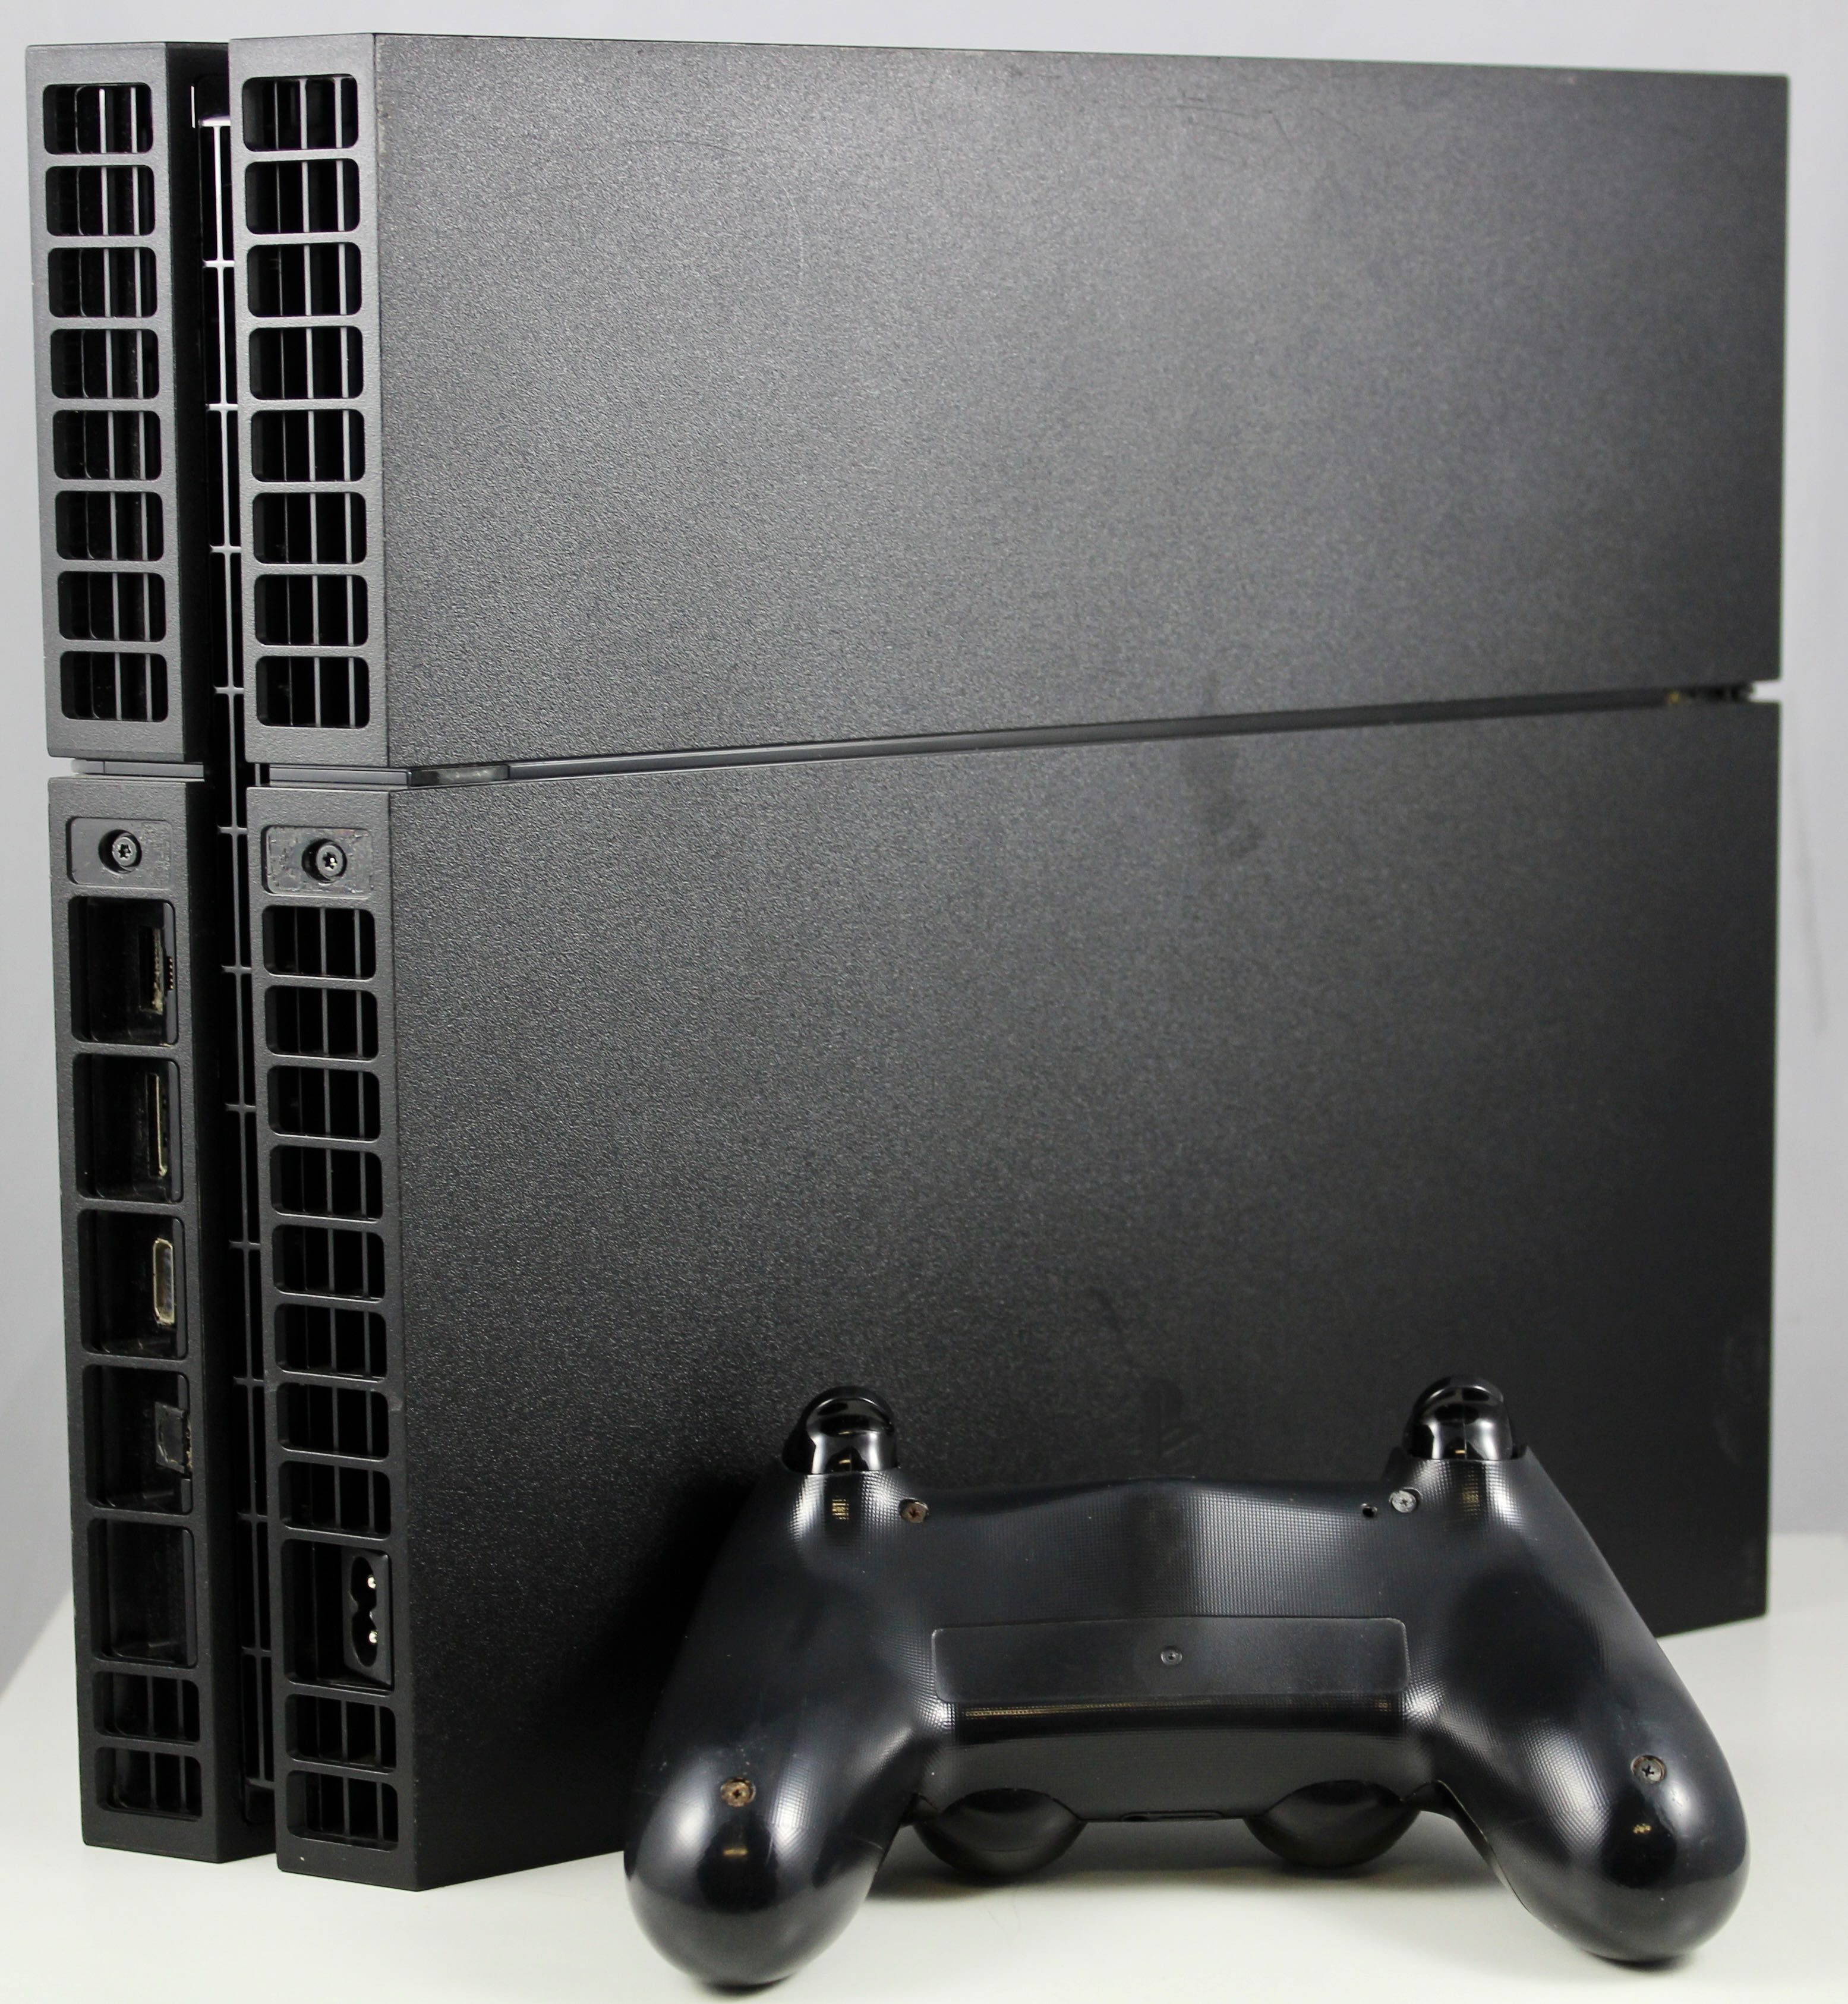 iGadżet | Sony PS4 1TB Pad Konsola Playstation kontroler